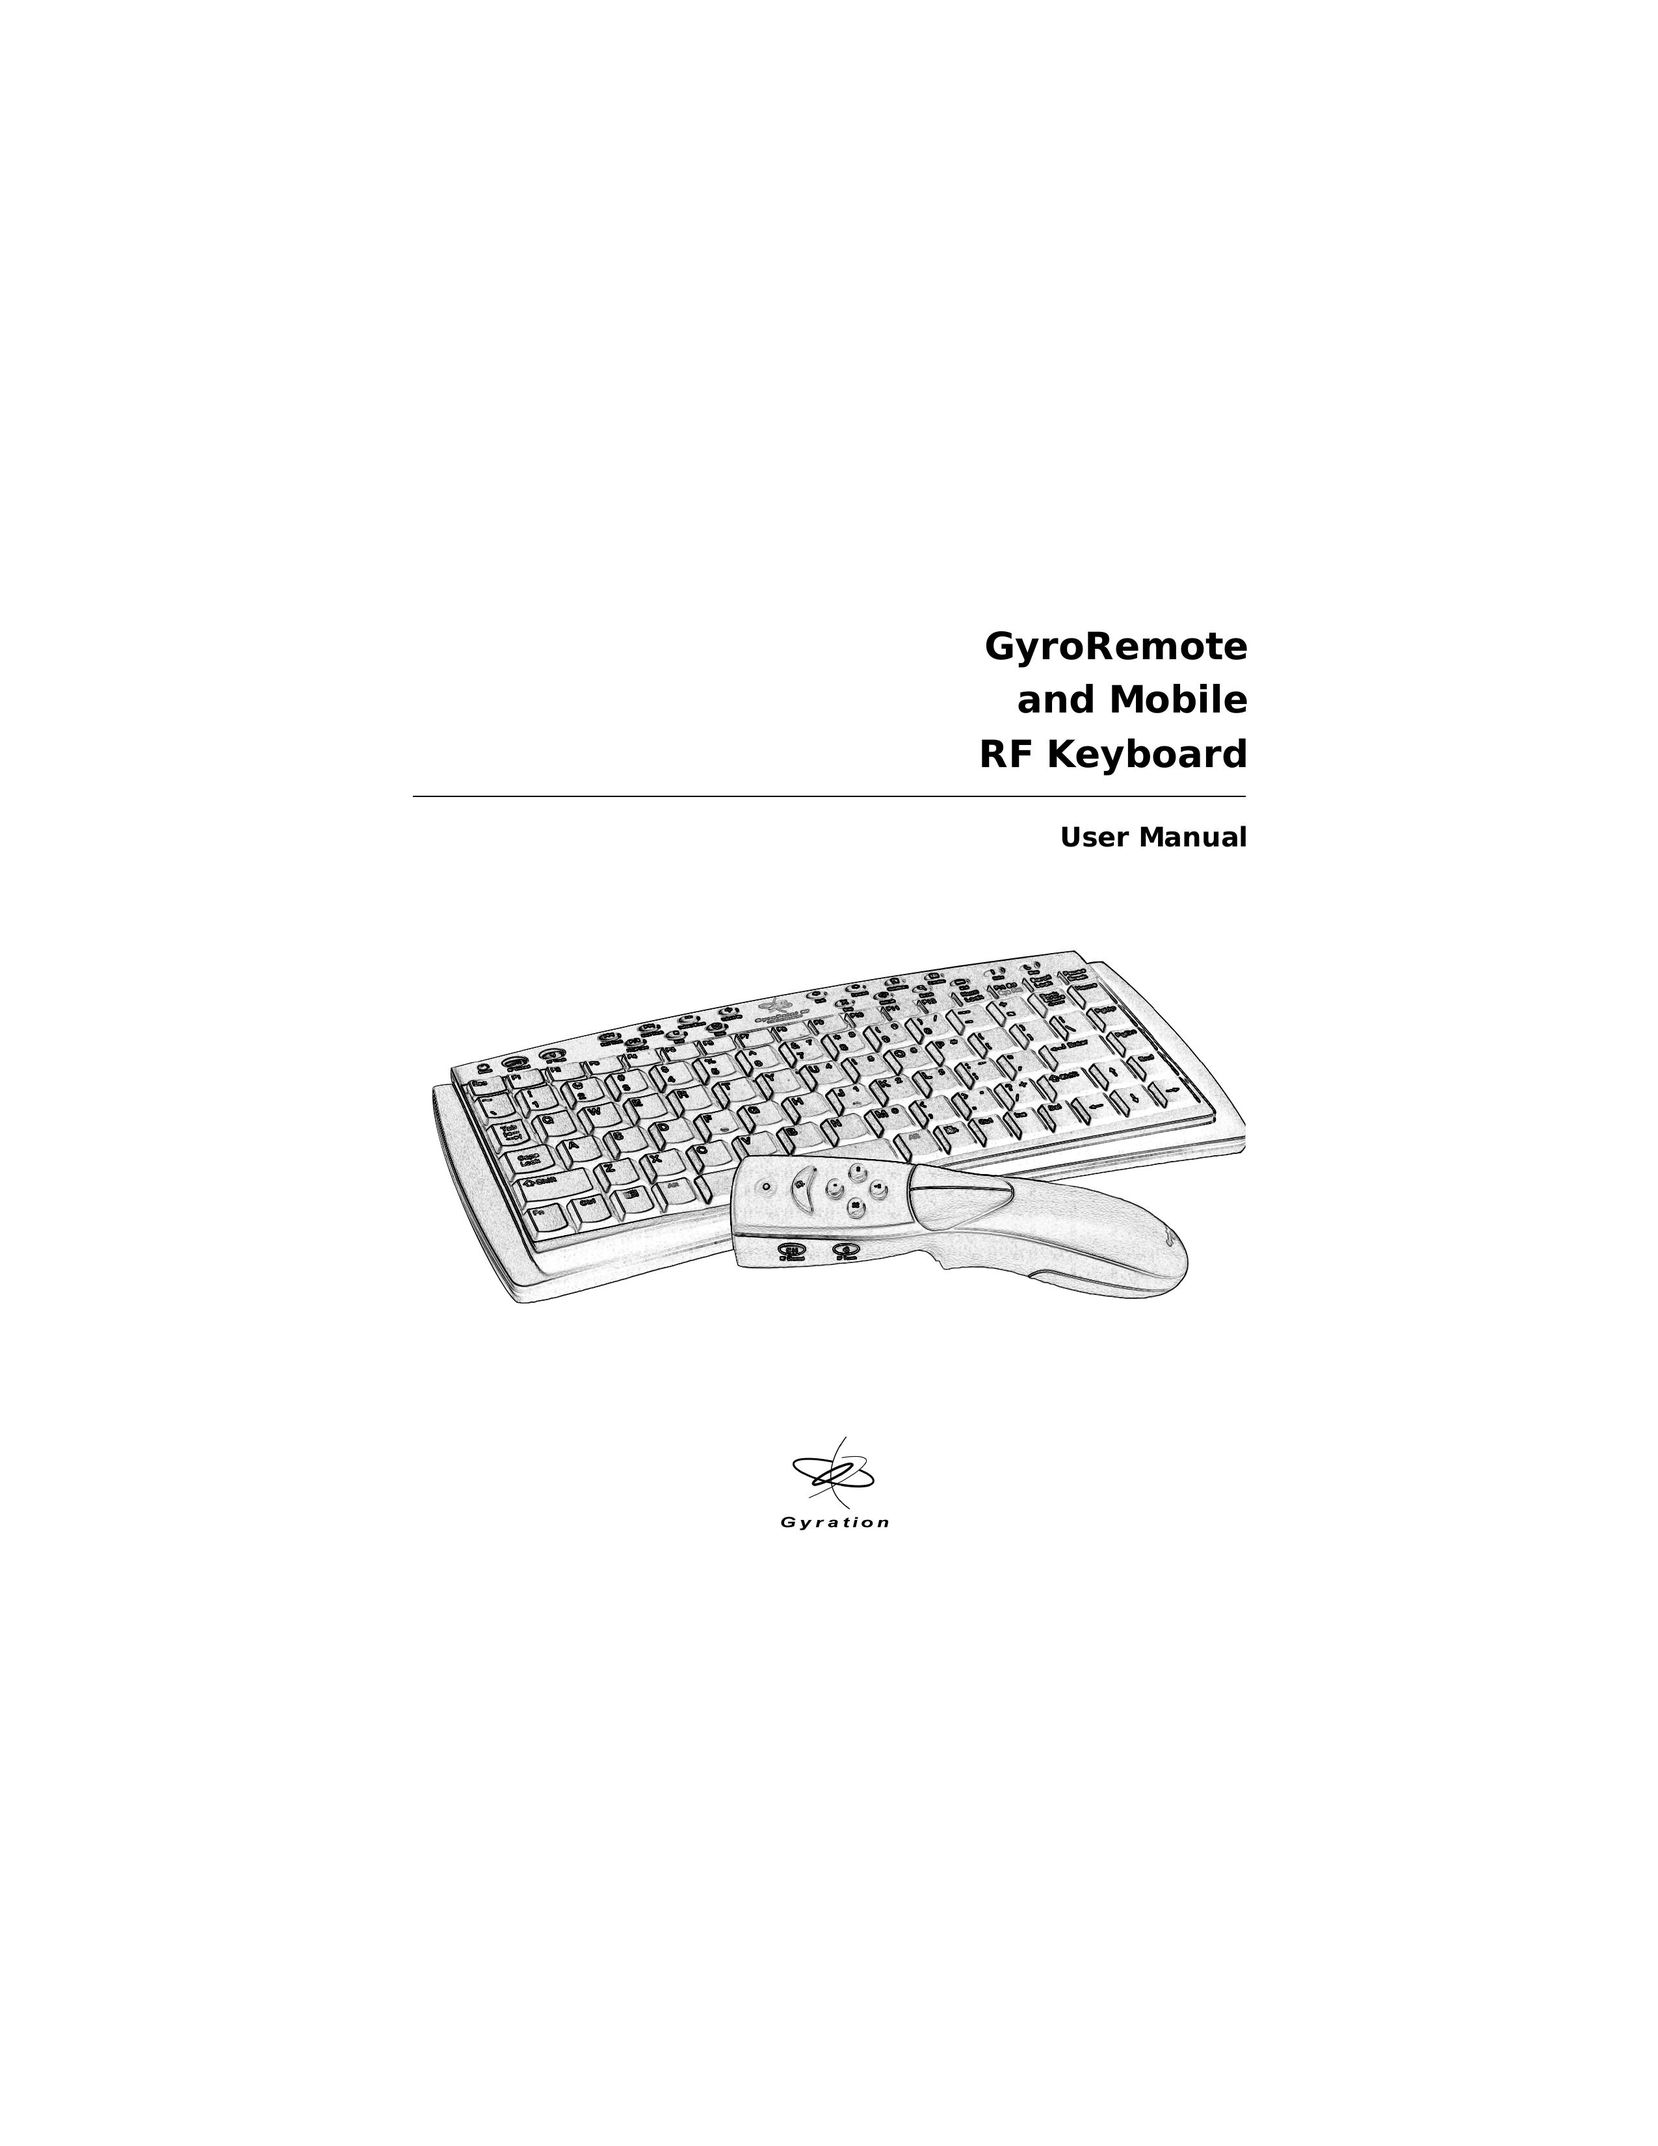 Gyration GyroRemote and Mobile RF Keyboard Personal Computer User Manual